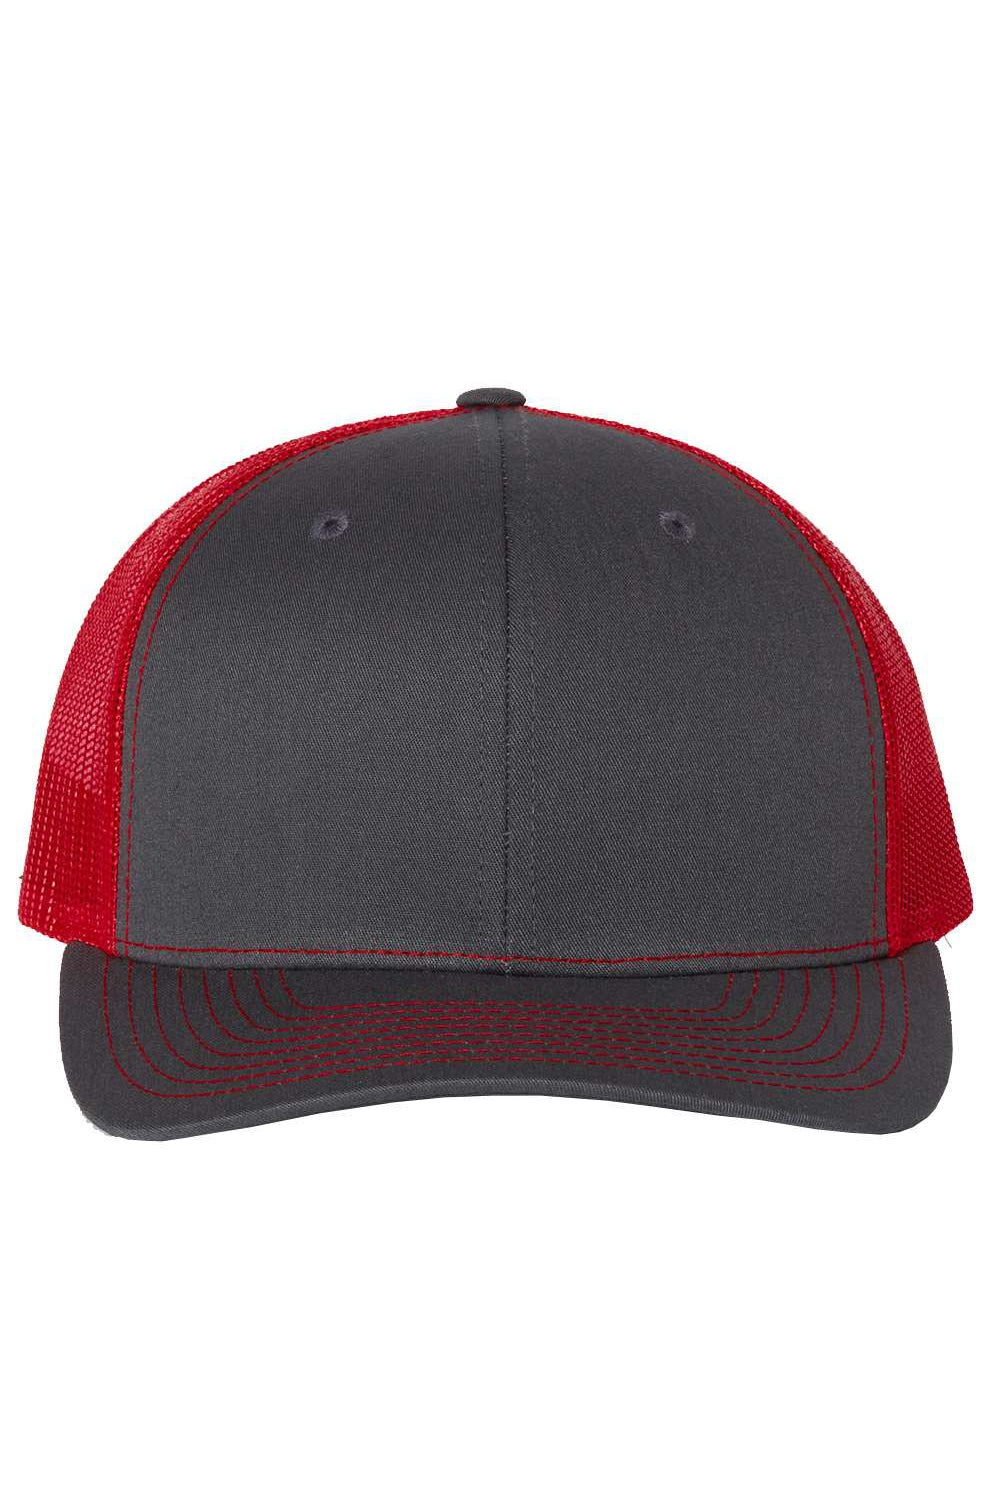 Richardson 112 Mens Snapback Trucker Hat Charcoal Grey/Red Flat Front